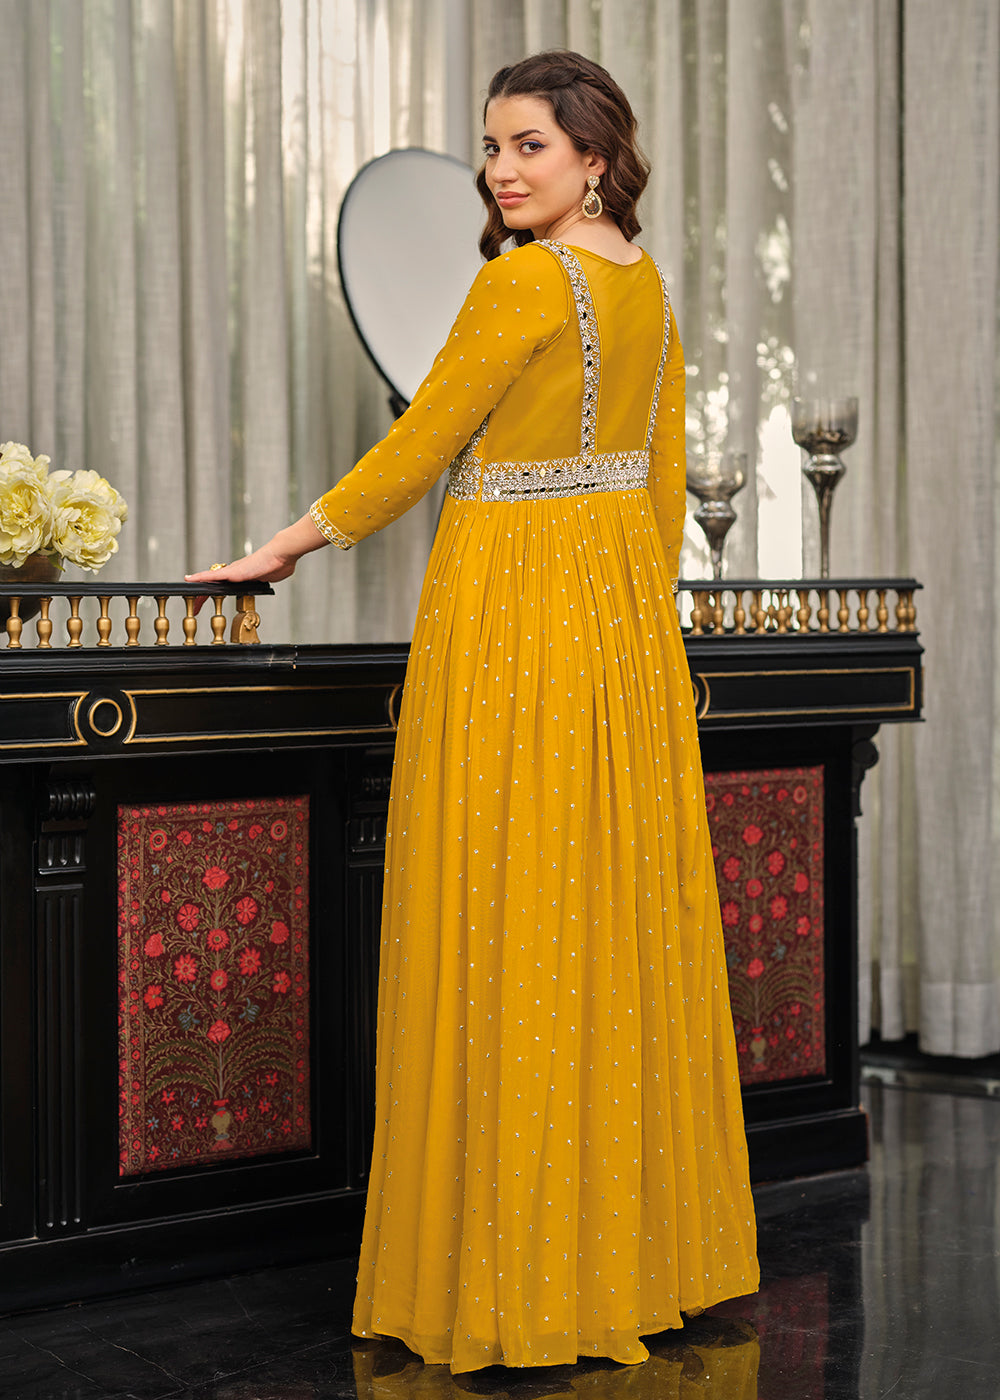 Buy Now Yellow Haldi Wedding Party Wear Long Anarkali Gown Online in USA, UK, Australia, New Zealand, Canada & Worldwide at Empress Clothing.